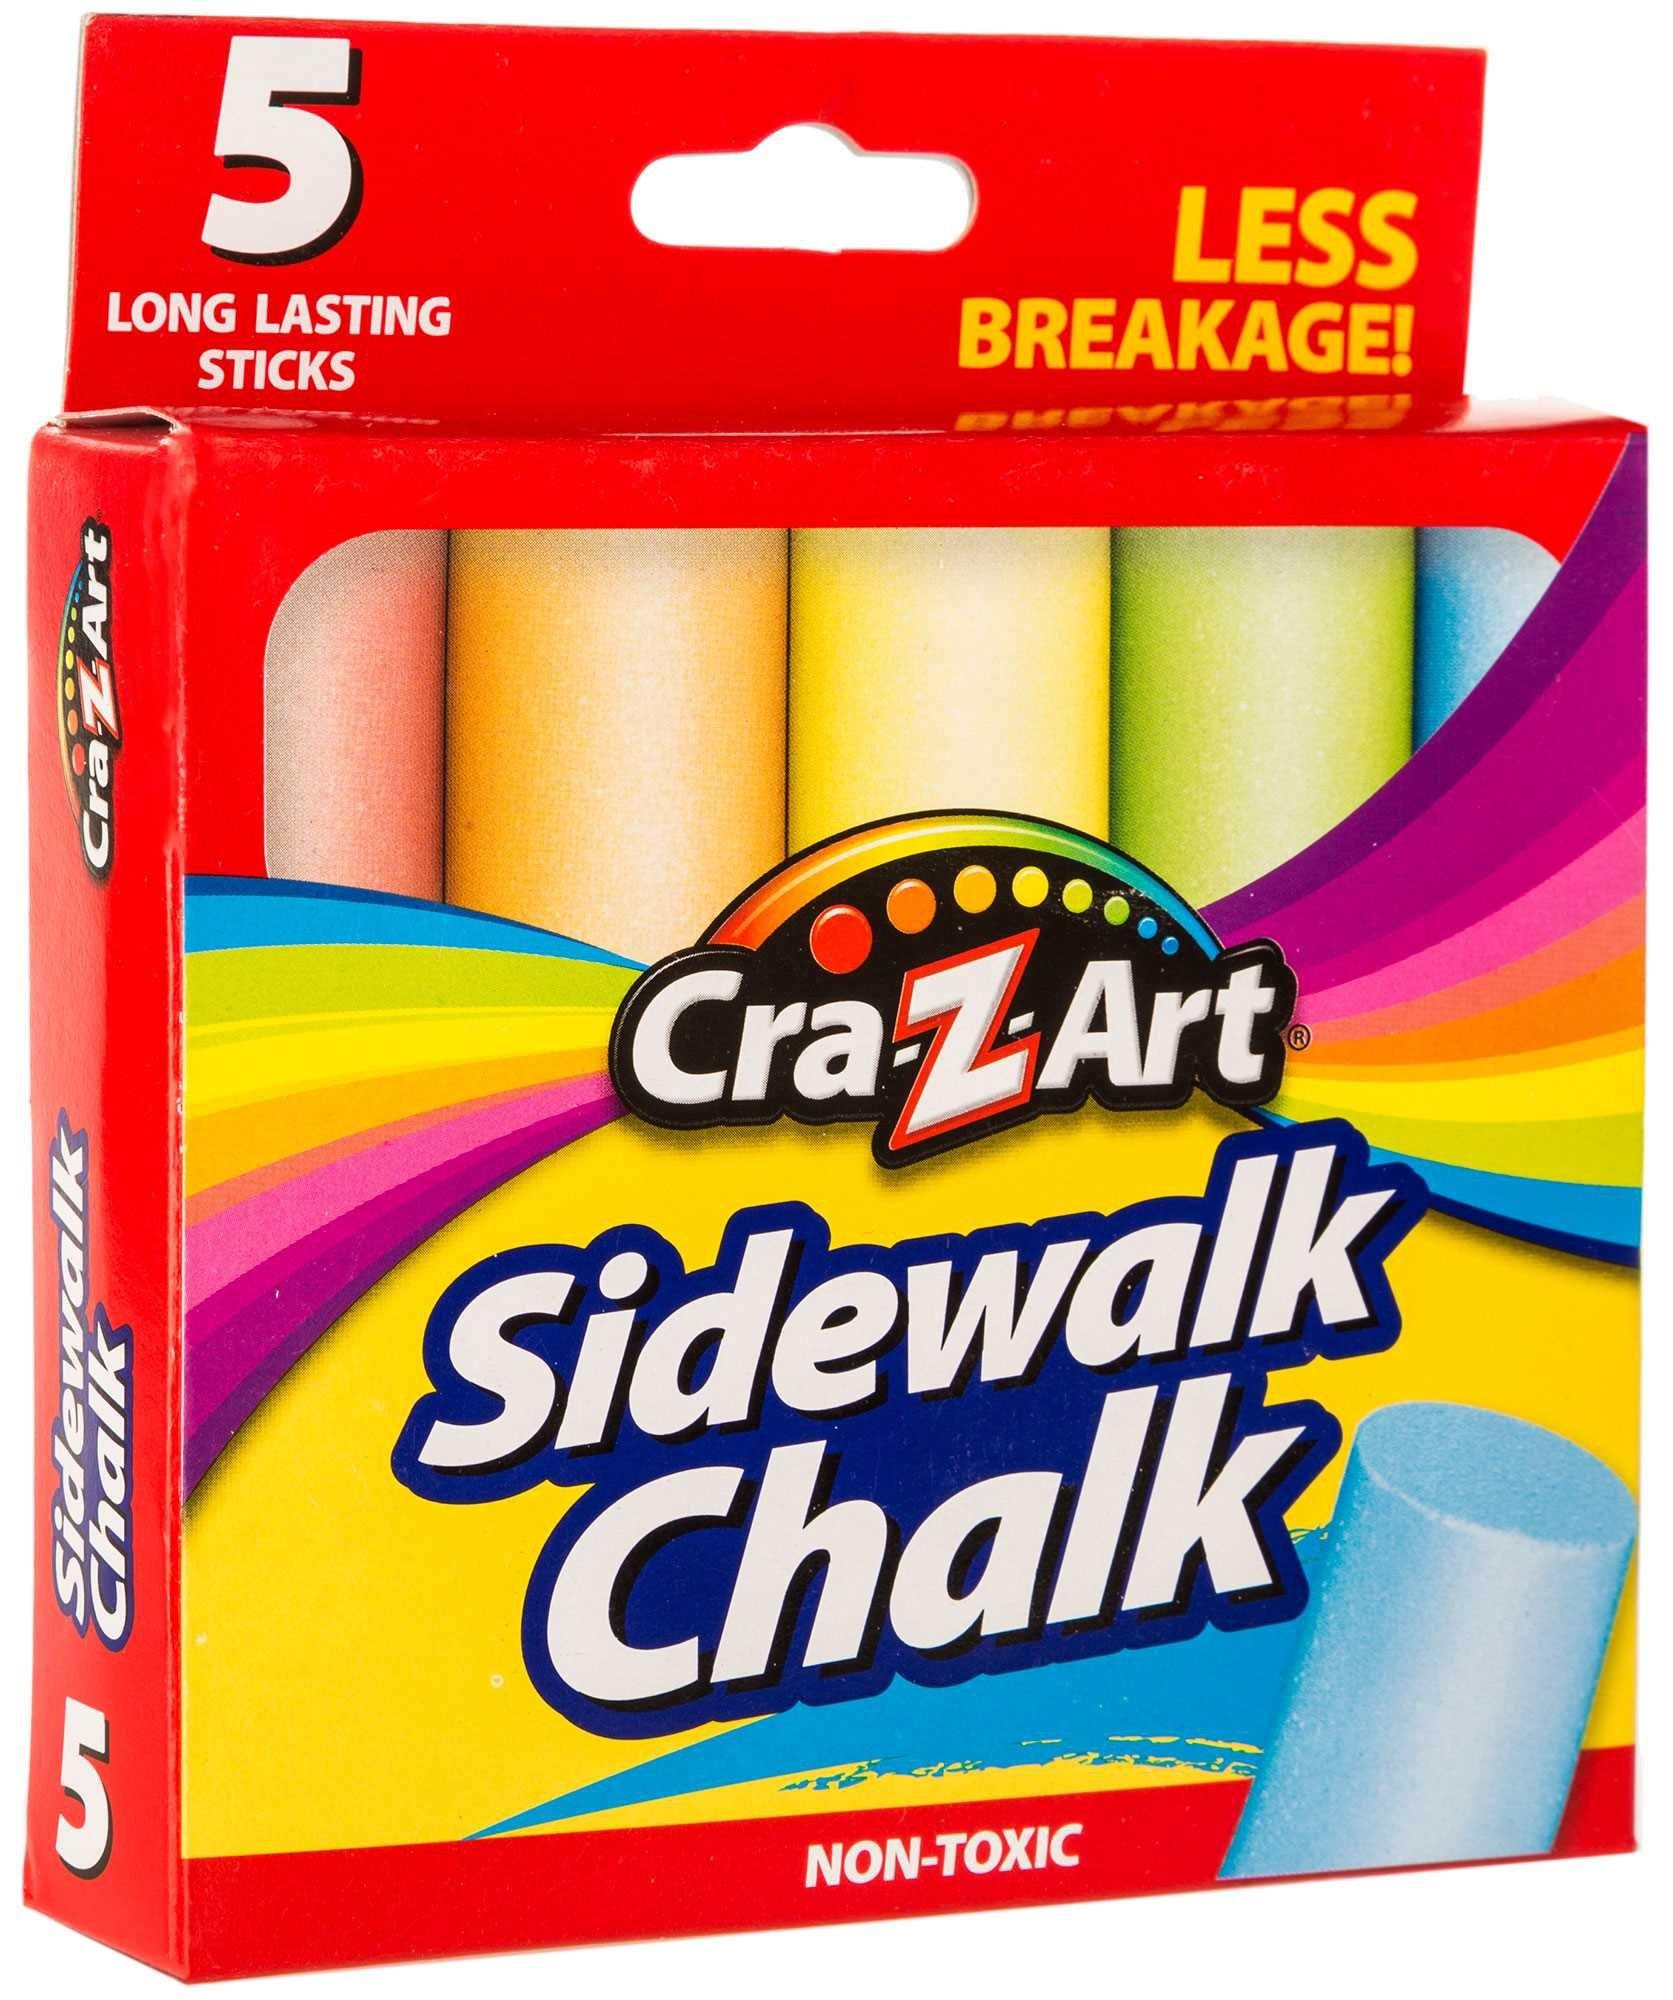 Crayola Chalk, Hobby Lobby